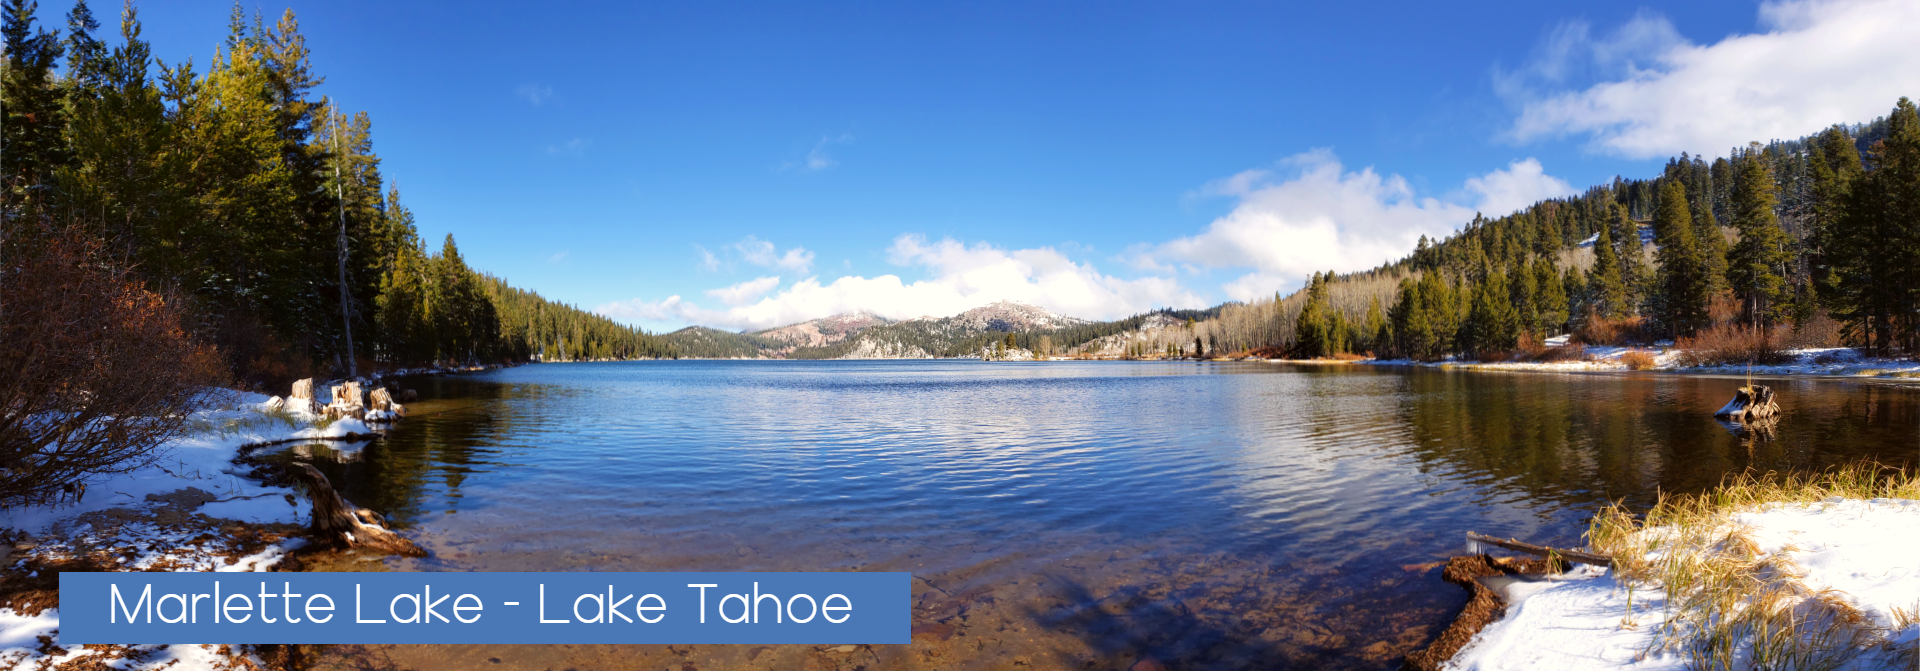 Best Lake Tahoe Day Hikes